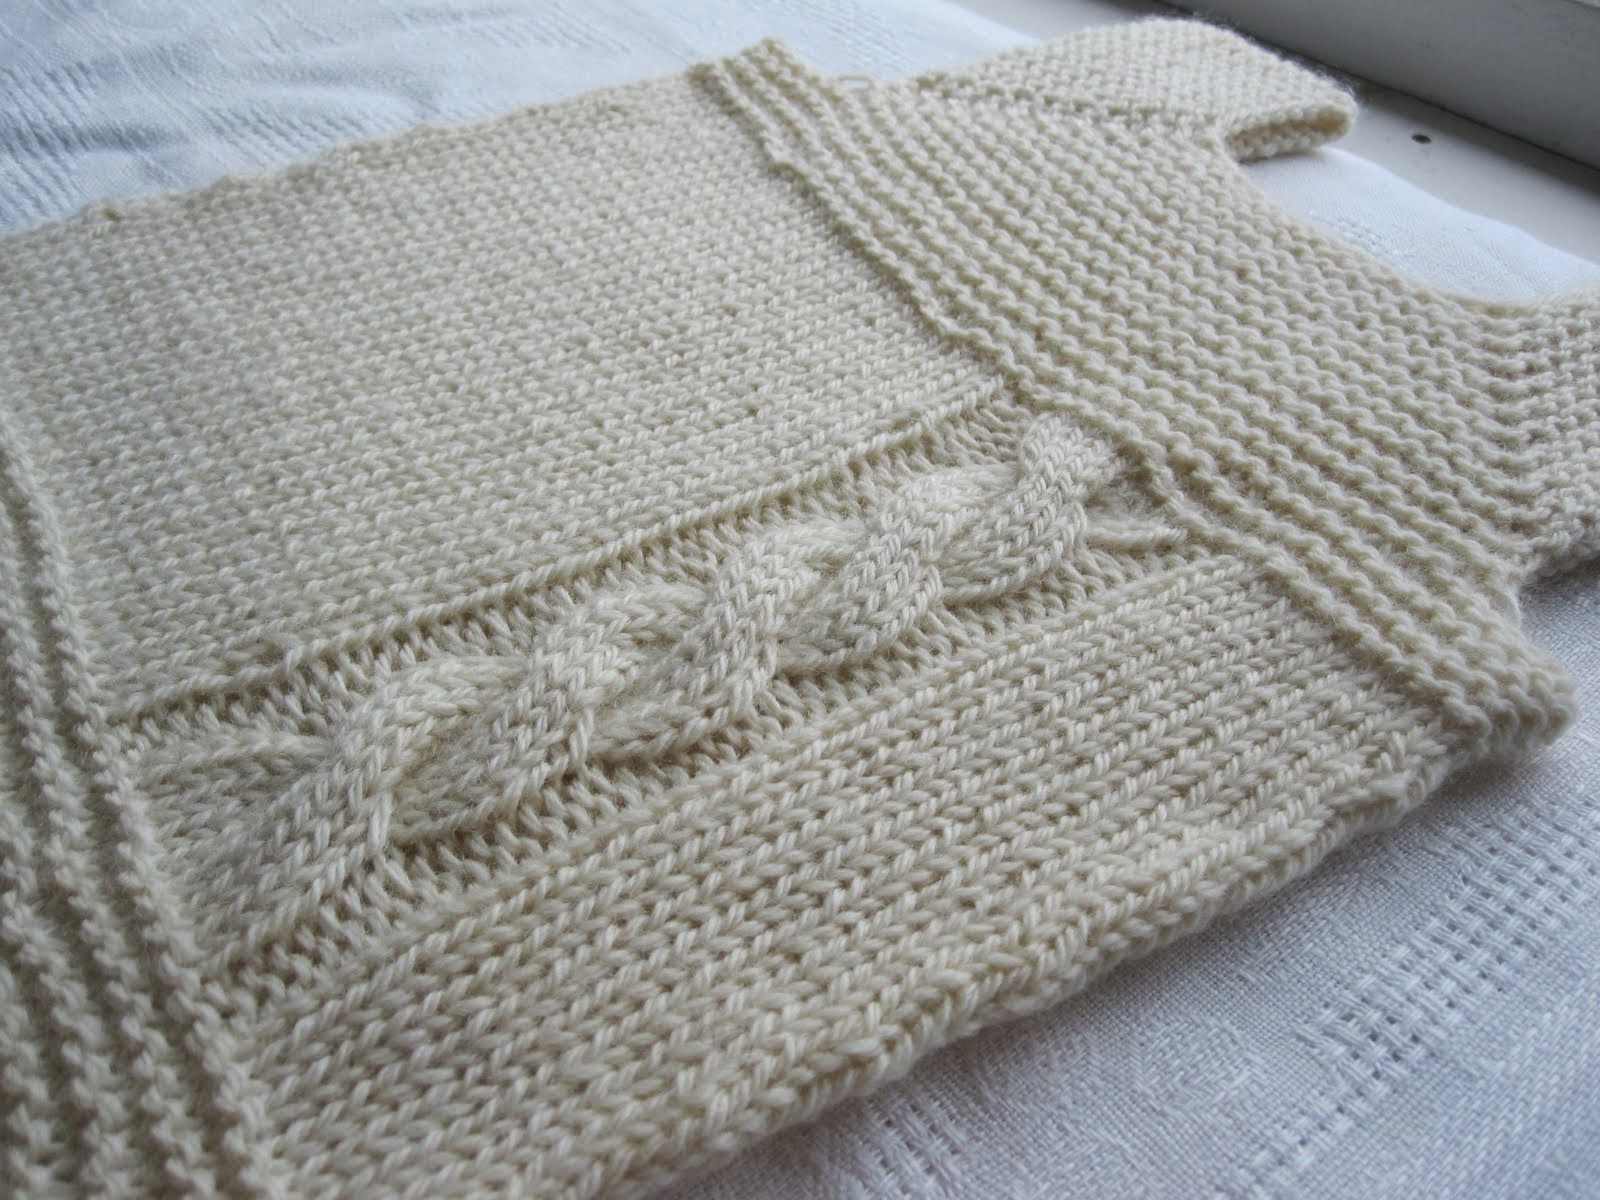 Make a Knit Vest: 5 Free Knitted Vest Patterns - Knitting Daily